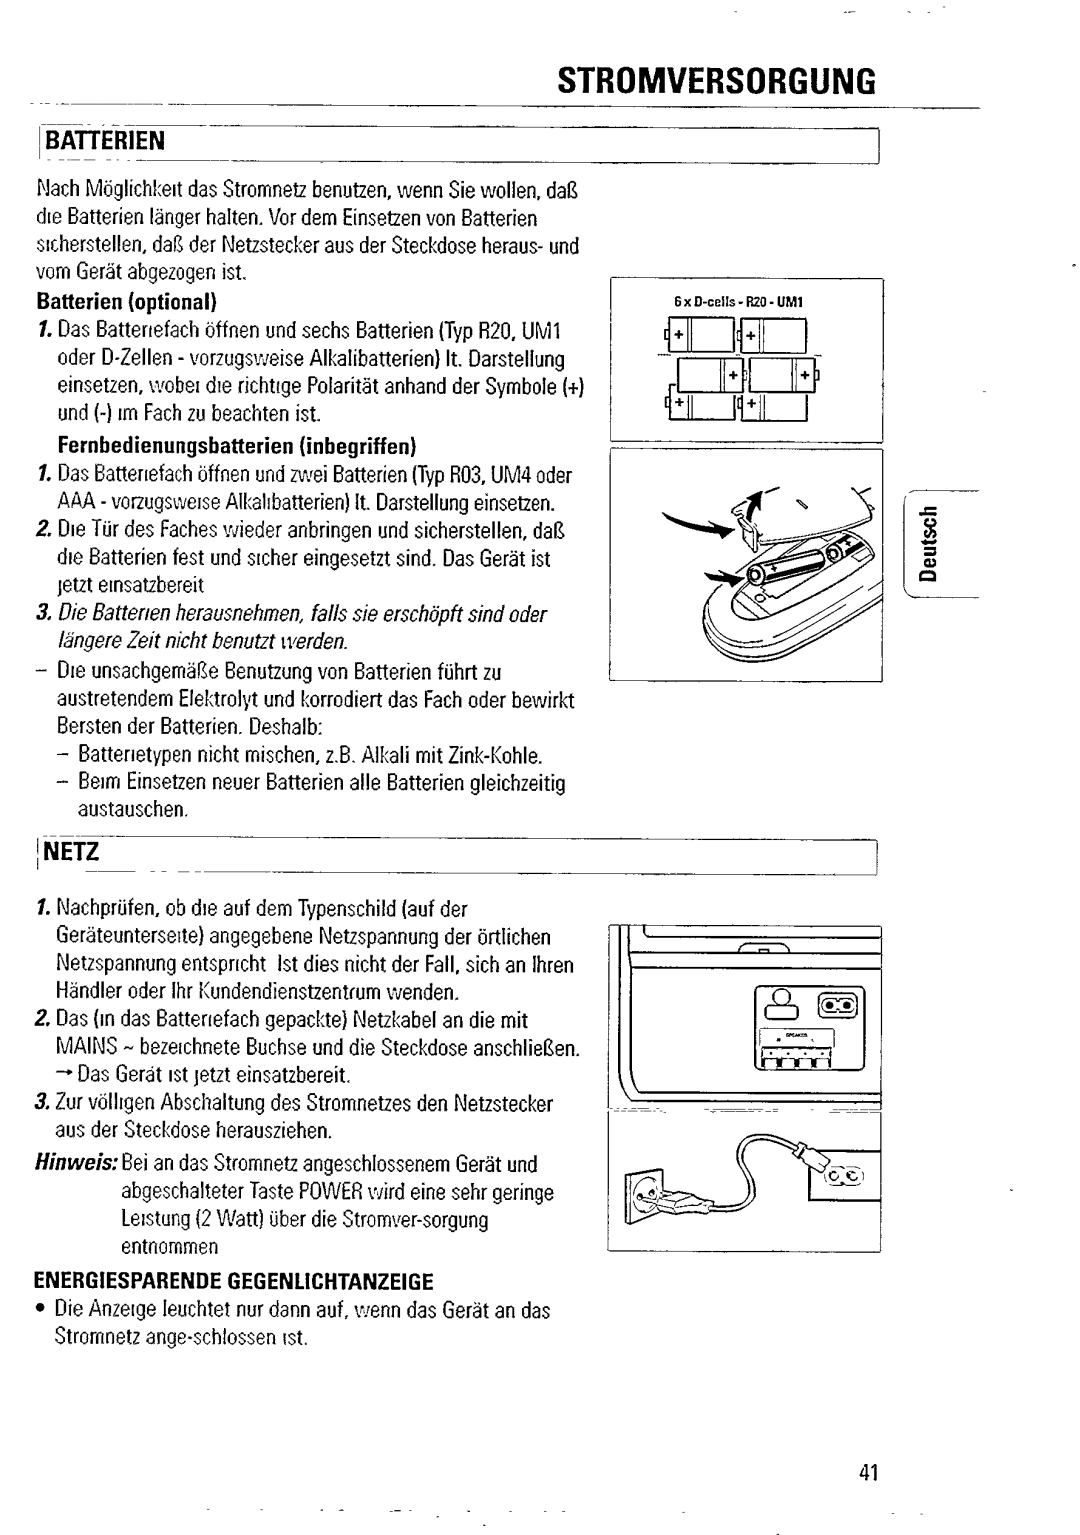 Philips AZ2407 manual 